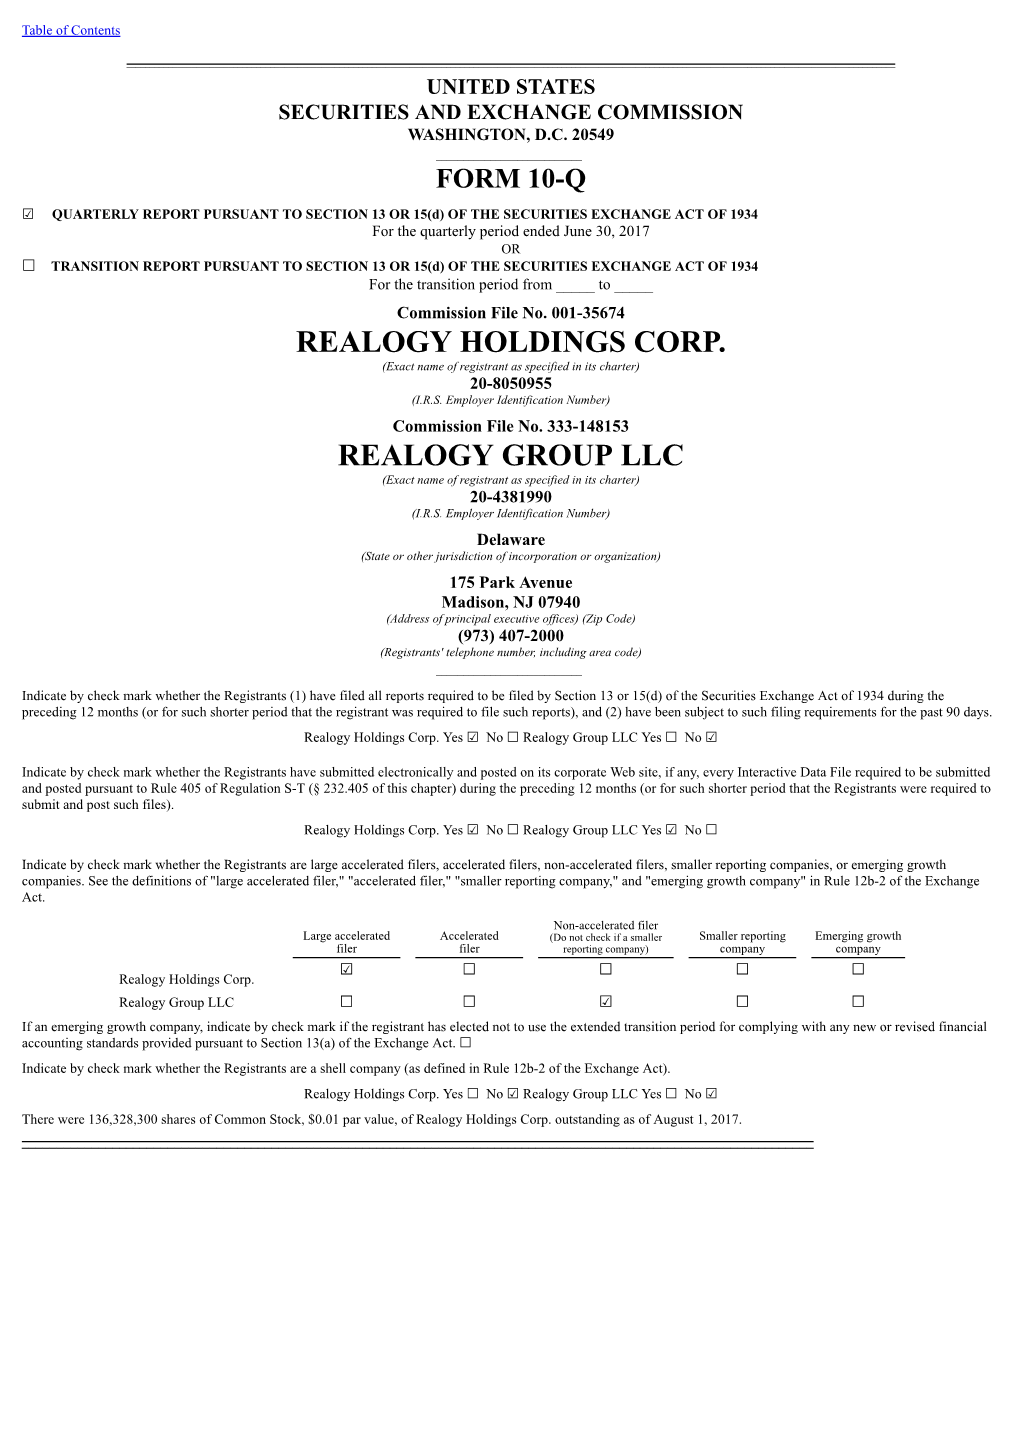 Realogy Holdings Corp. Realogy Group